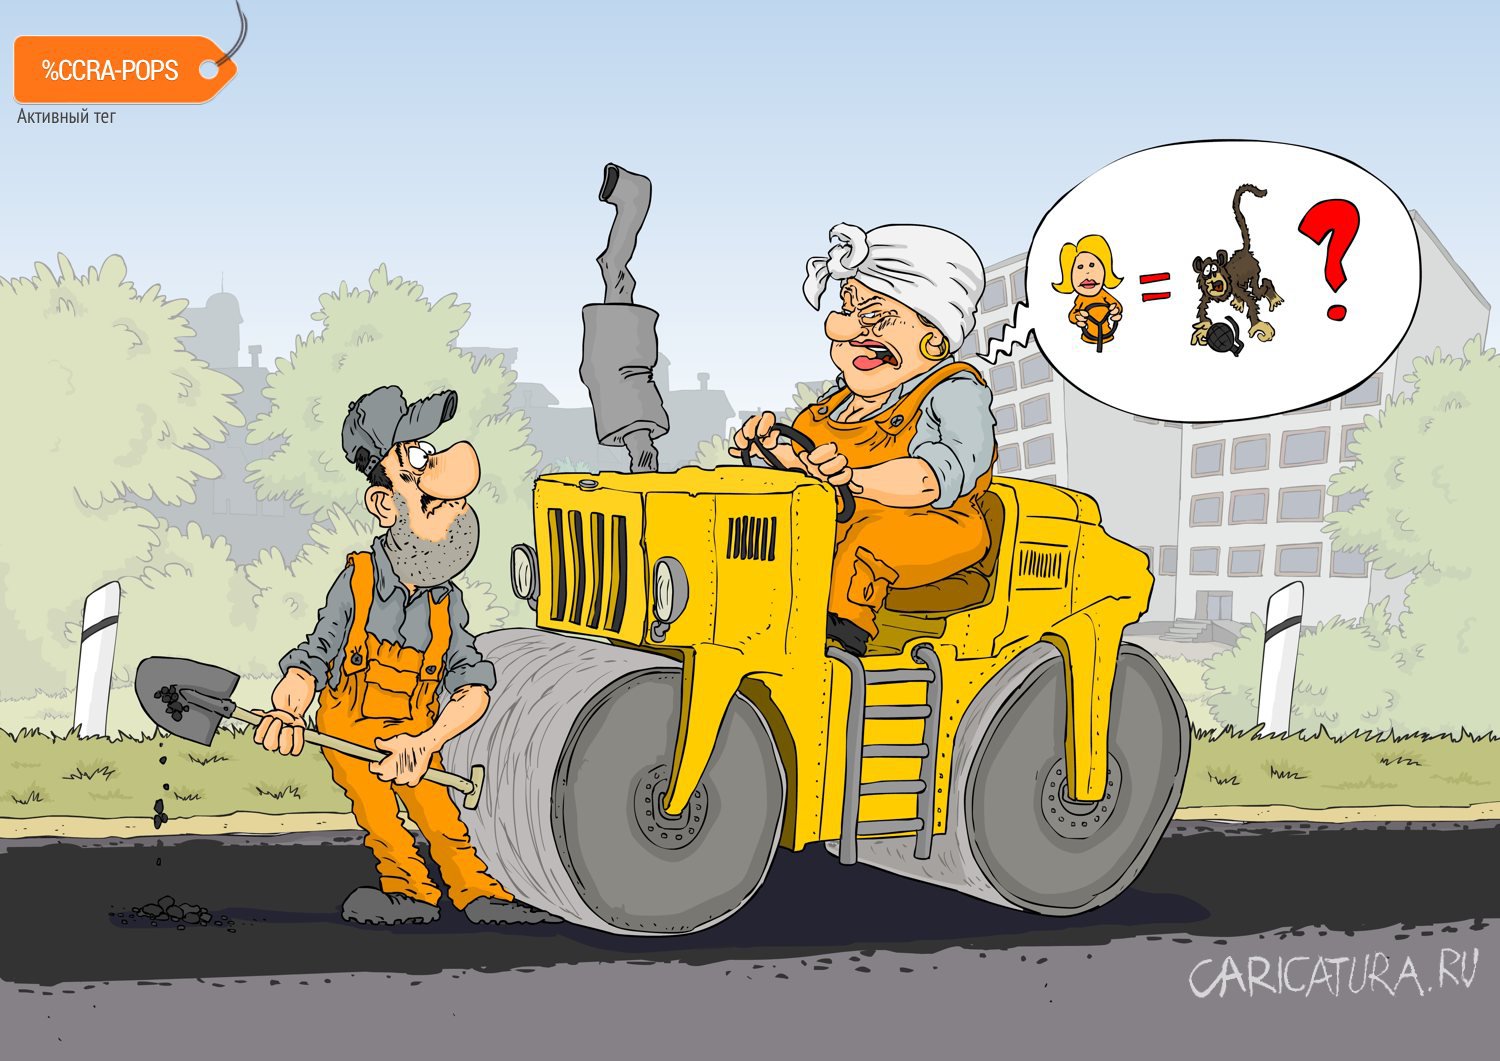 Карикатура "Случай на работе", Zemgus Zaharans